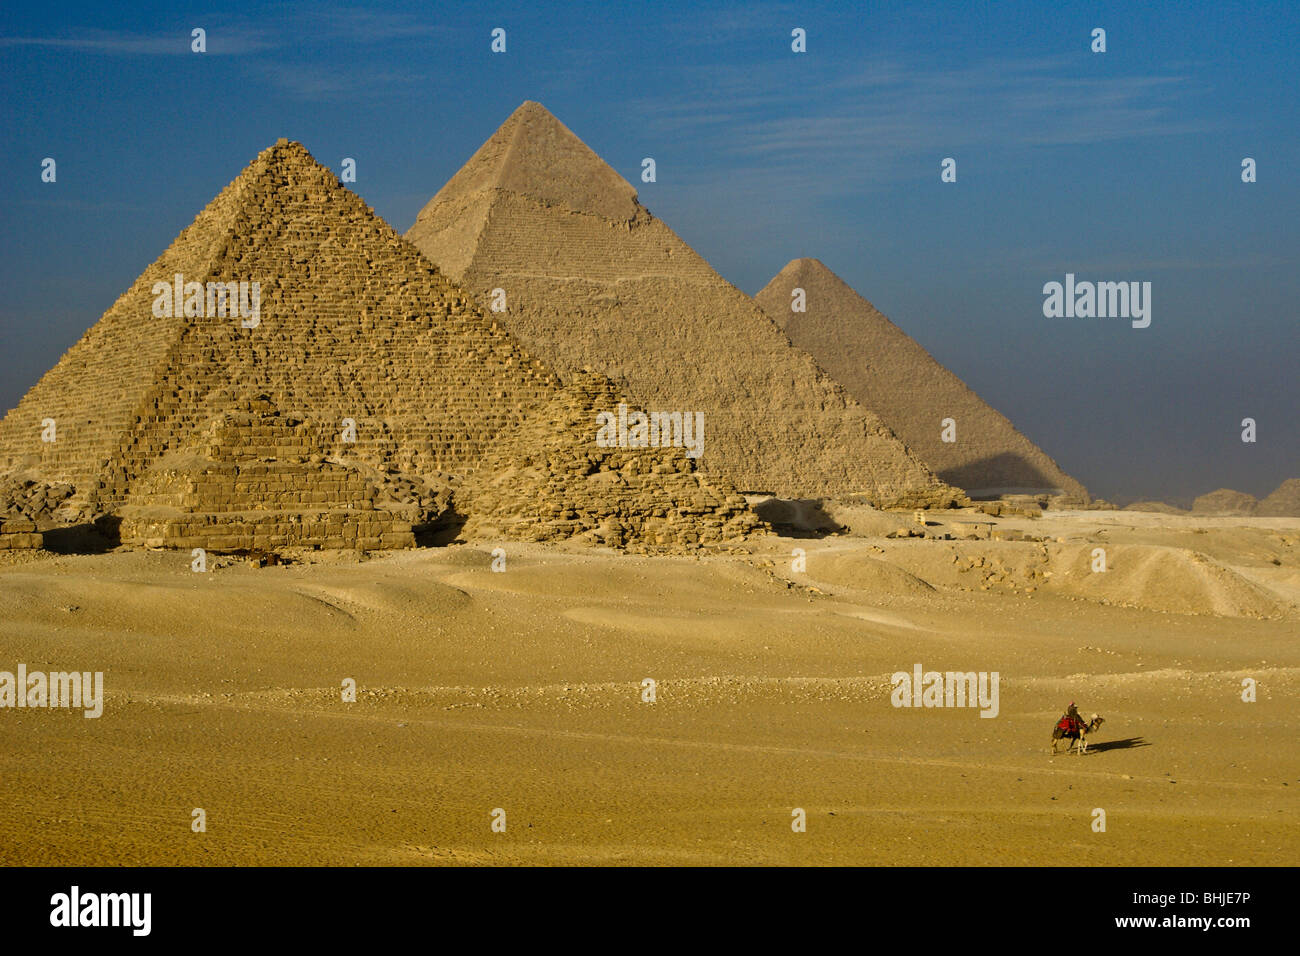 The Pyramids of Giza, Cairo, Egypt Stock Photo